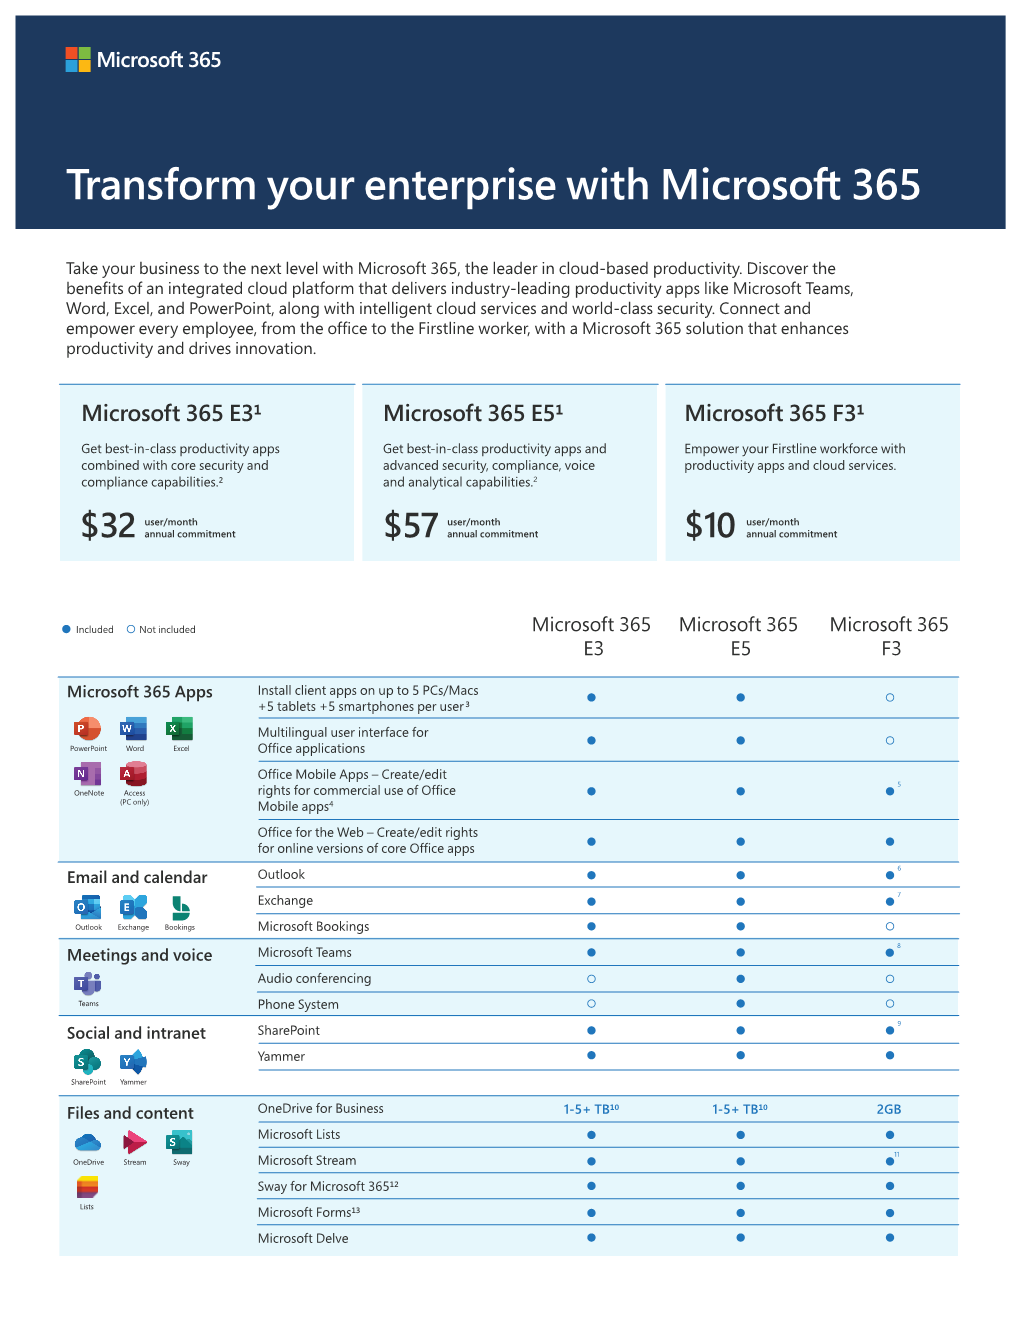 Transform Your Enterprise with Microsoft 365